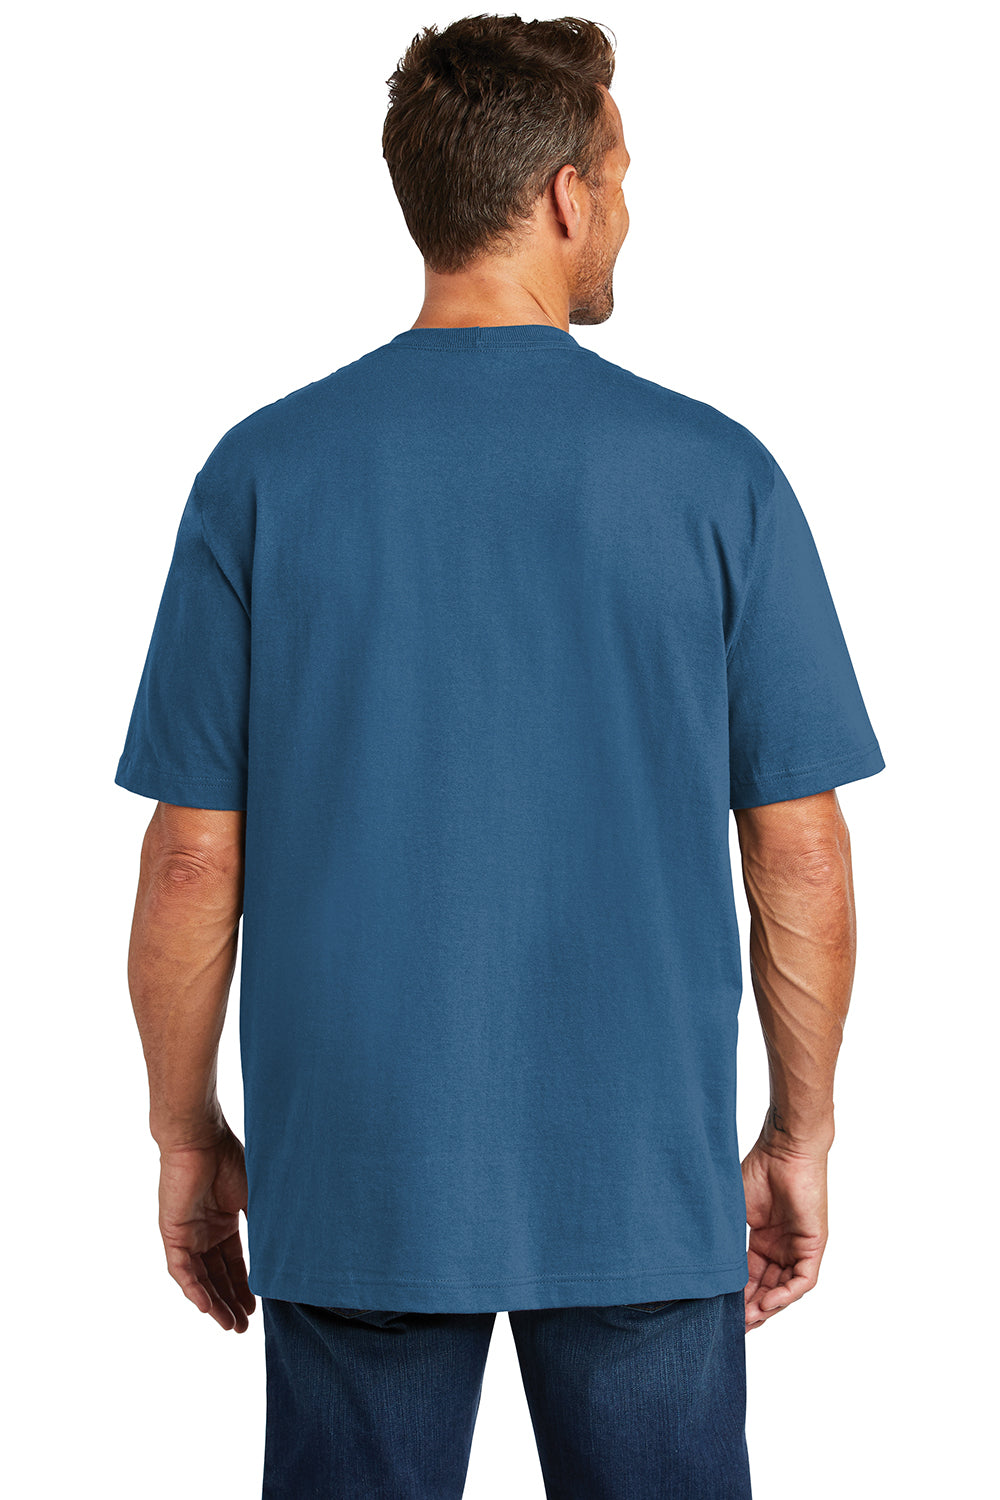 Carhartt CTK87/CTTK87 Mens Workwear Short Sleeve Crewneck T-Shirt w/ Pocket Lakeshore Blue Model Back